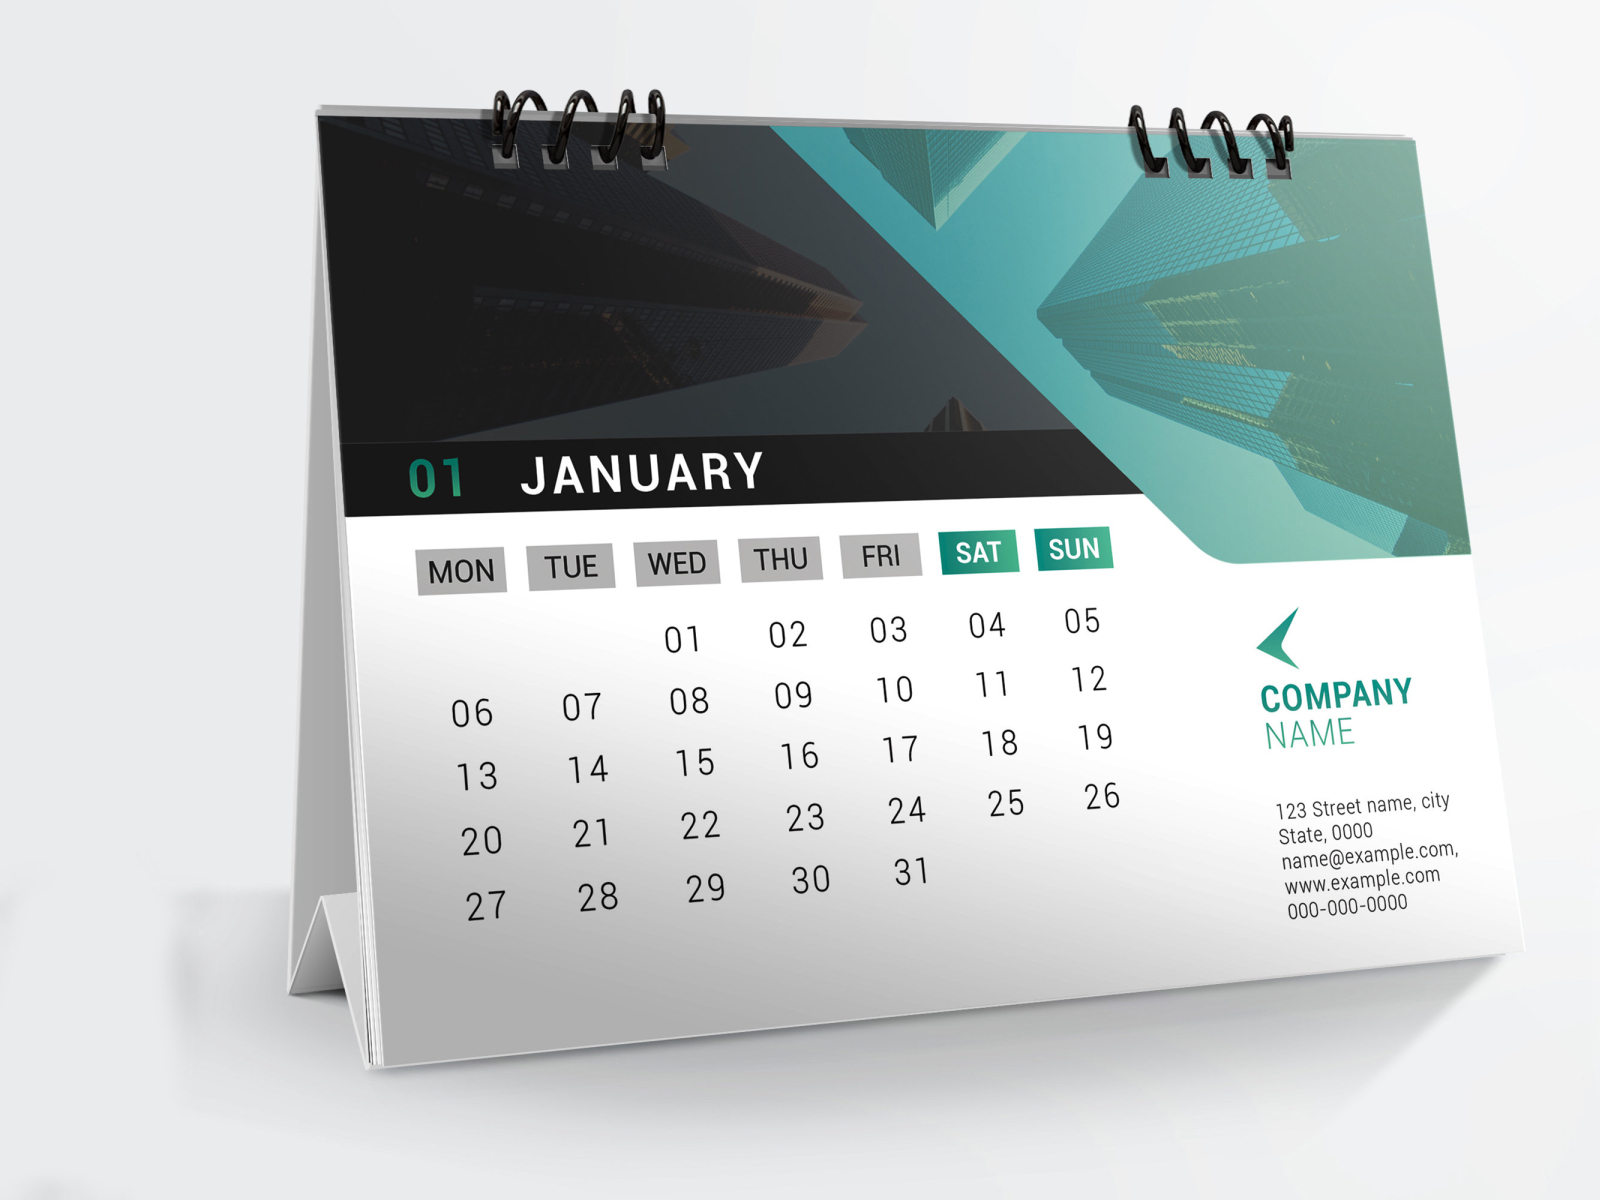 Corporate Desk Calendar Template by Mukhlasur Rahman on Dribbble